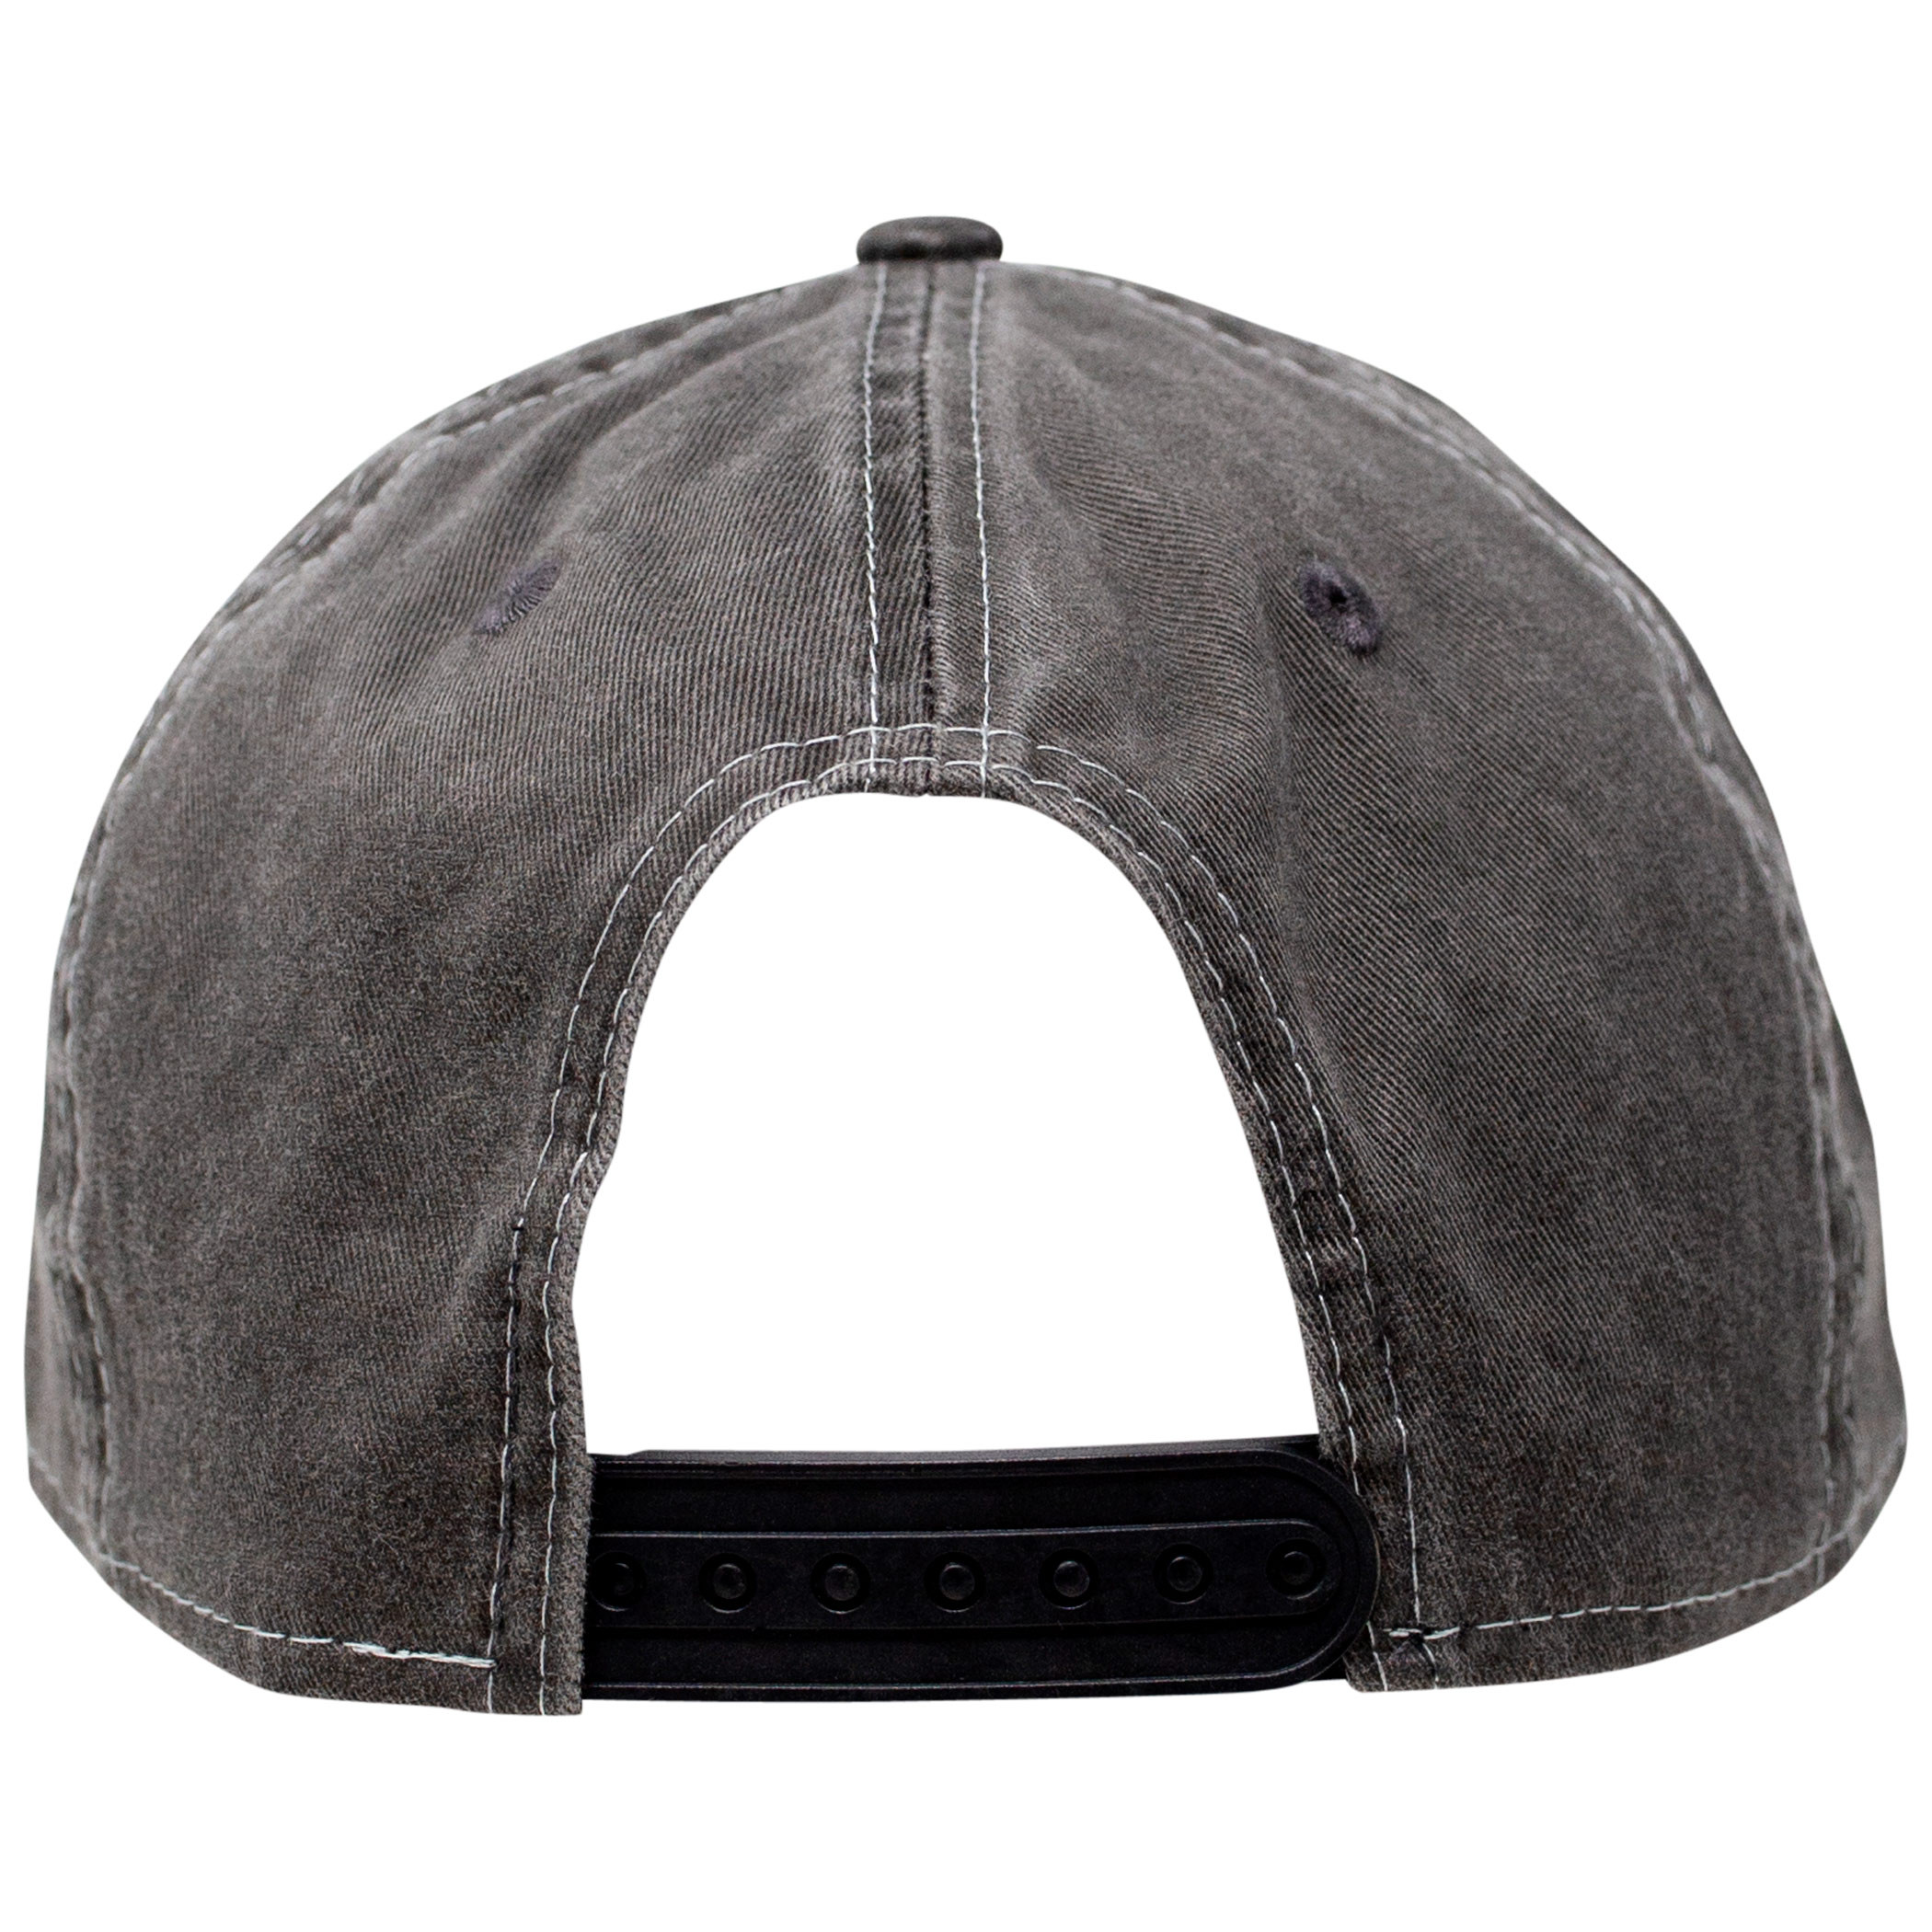 New Coors Light Snapback Hat Black Grey Beer Molson Adjustable 